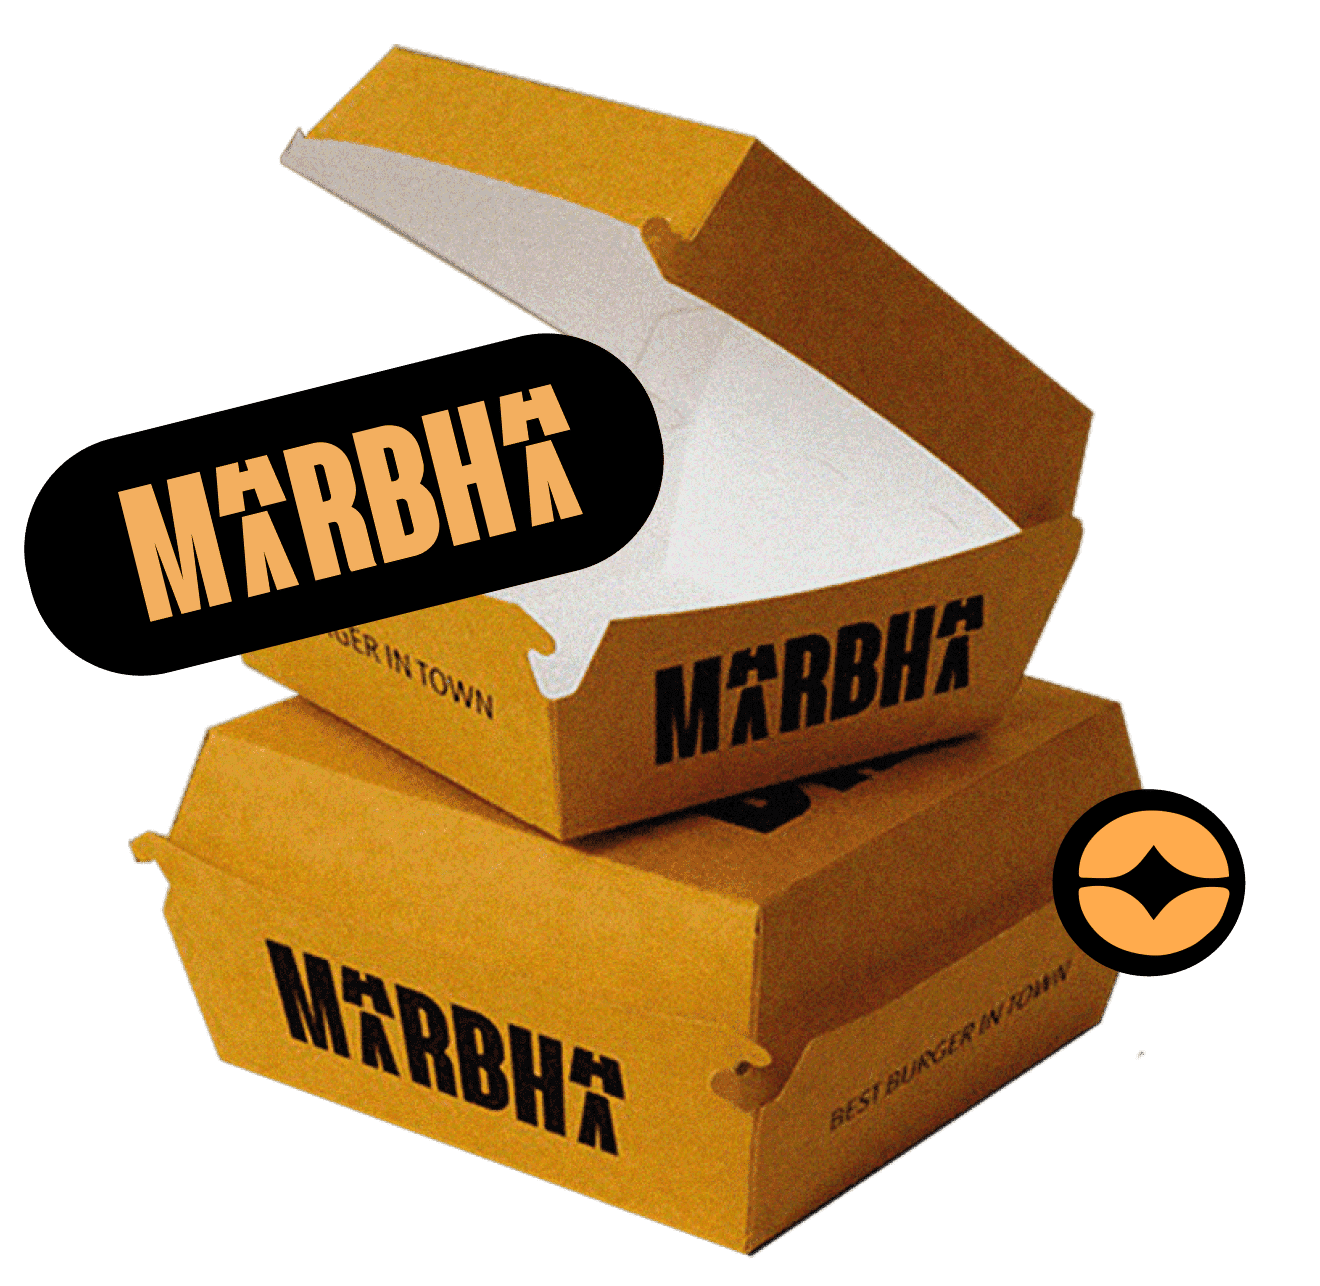 Marbha branding mockup